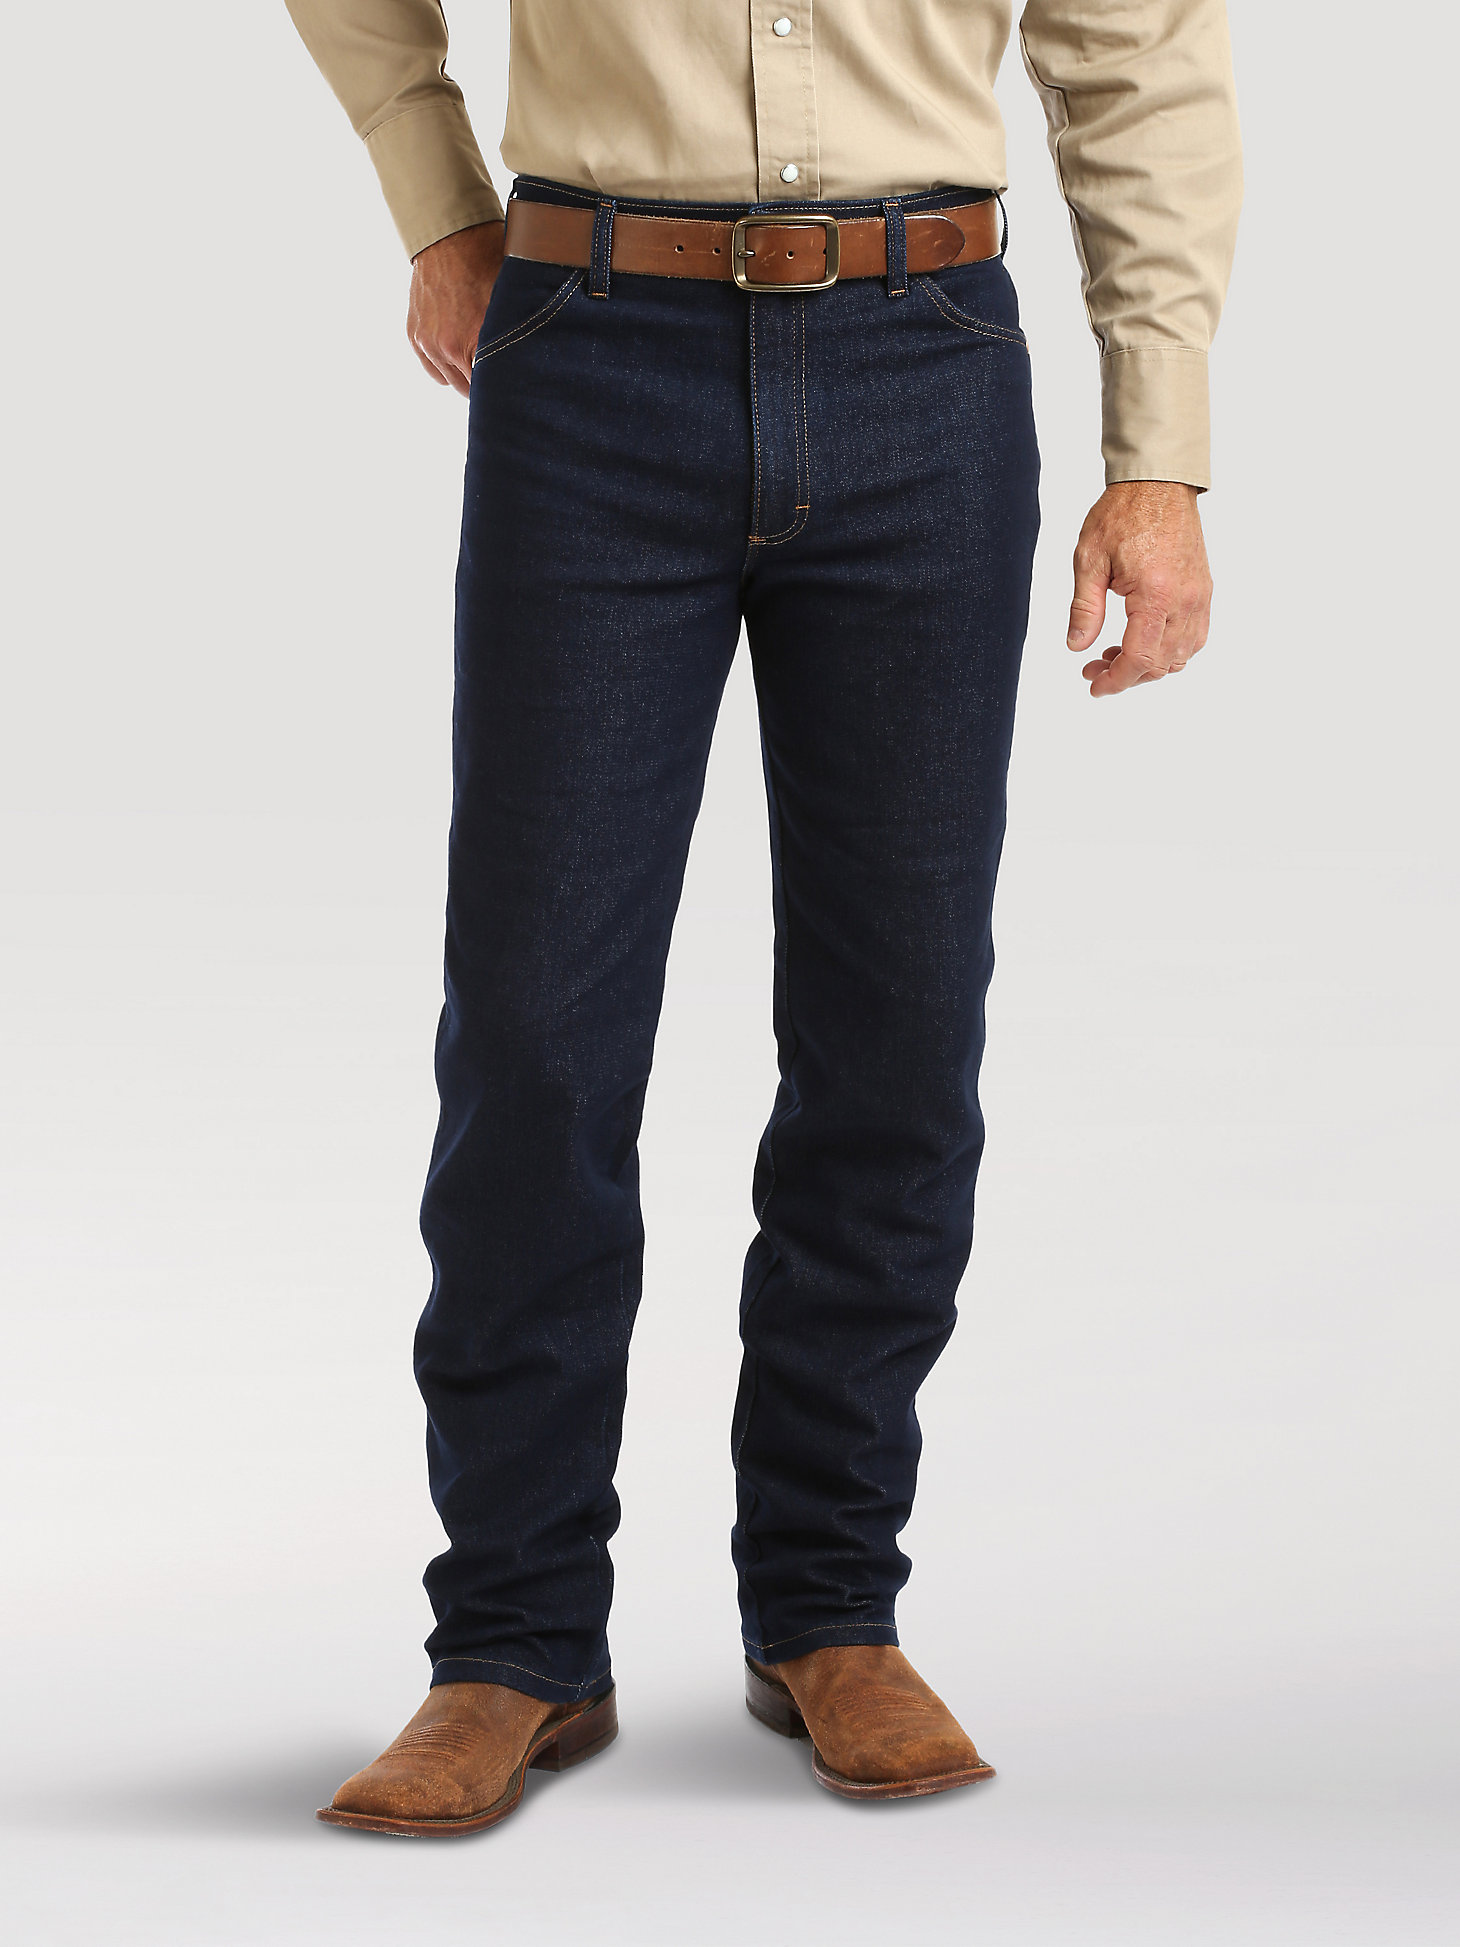 Wrangler® Cowboy Cut® Original Fit Active Flex Jeans in Prewashed Indigo alternative view 1